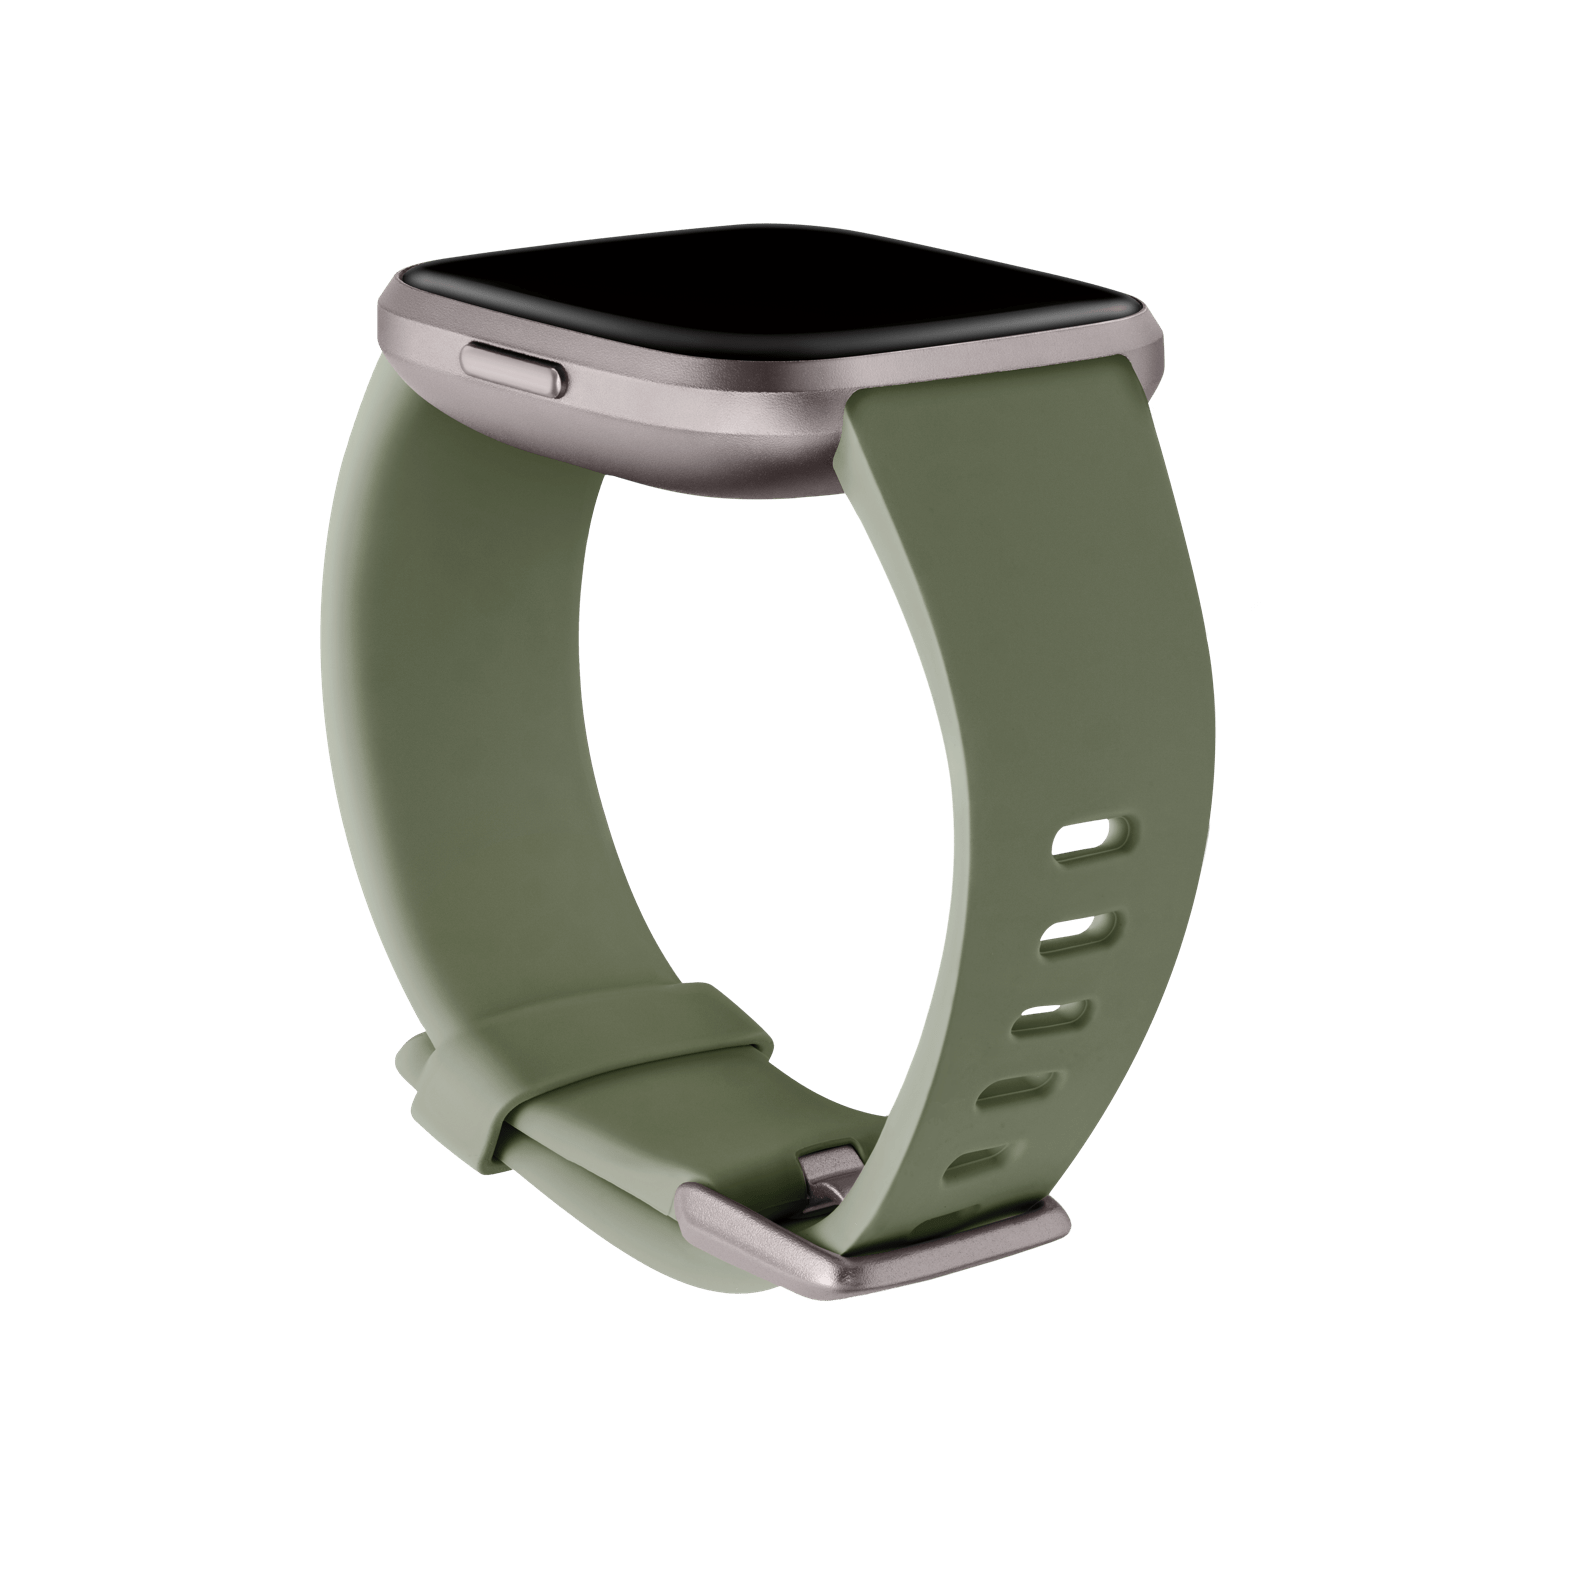 Ouwegaga Bracelet Compatible avec Fitbit Versa Bracelet/Fitbit